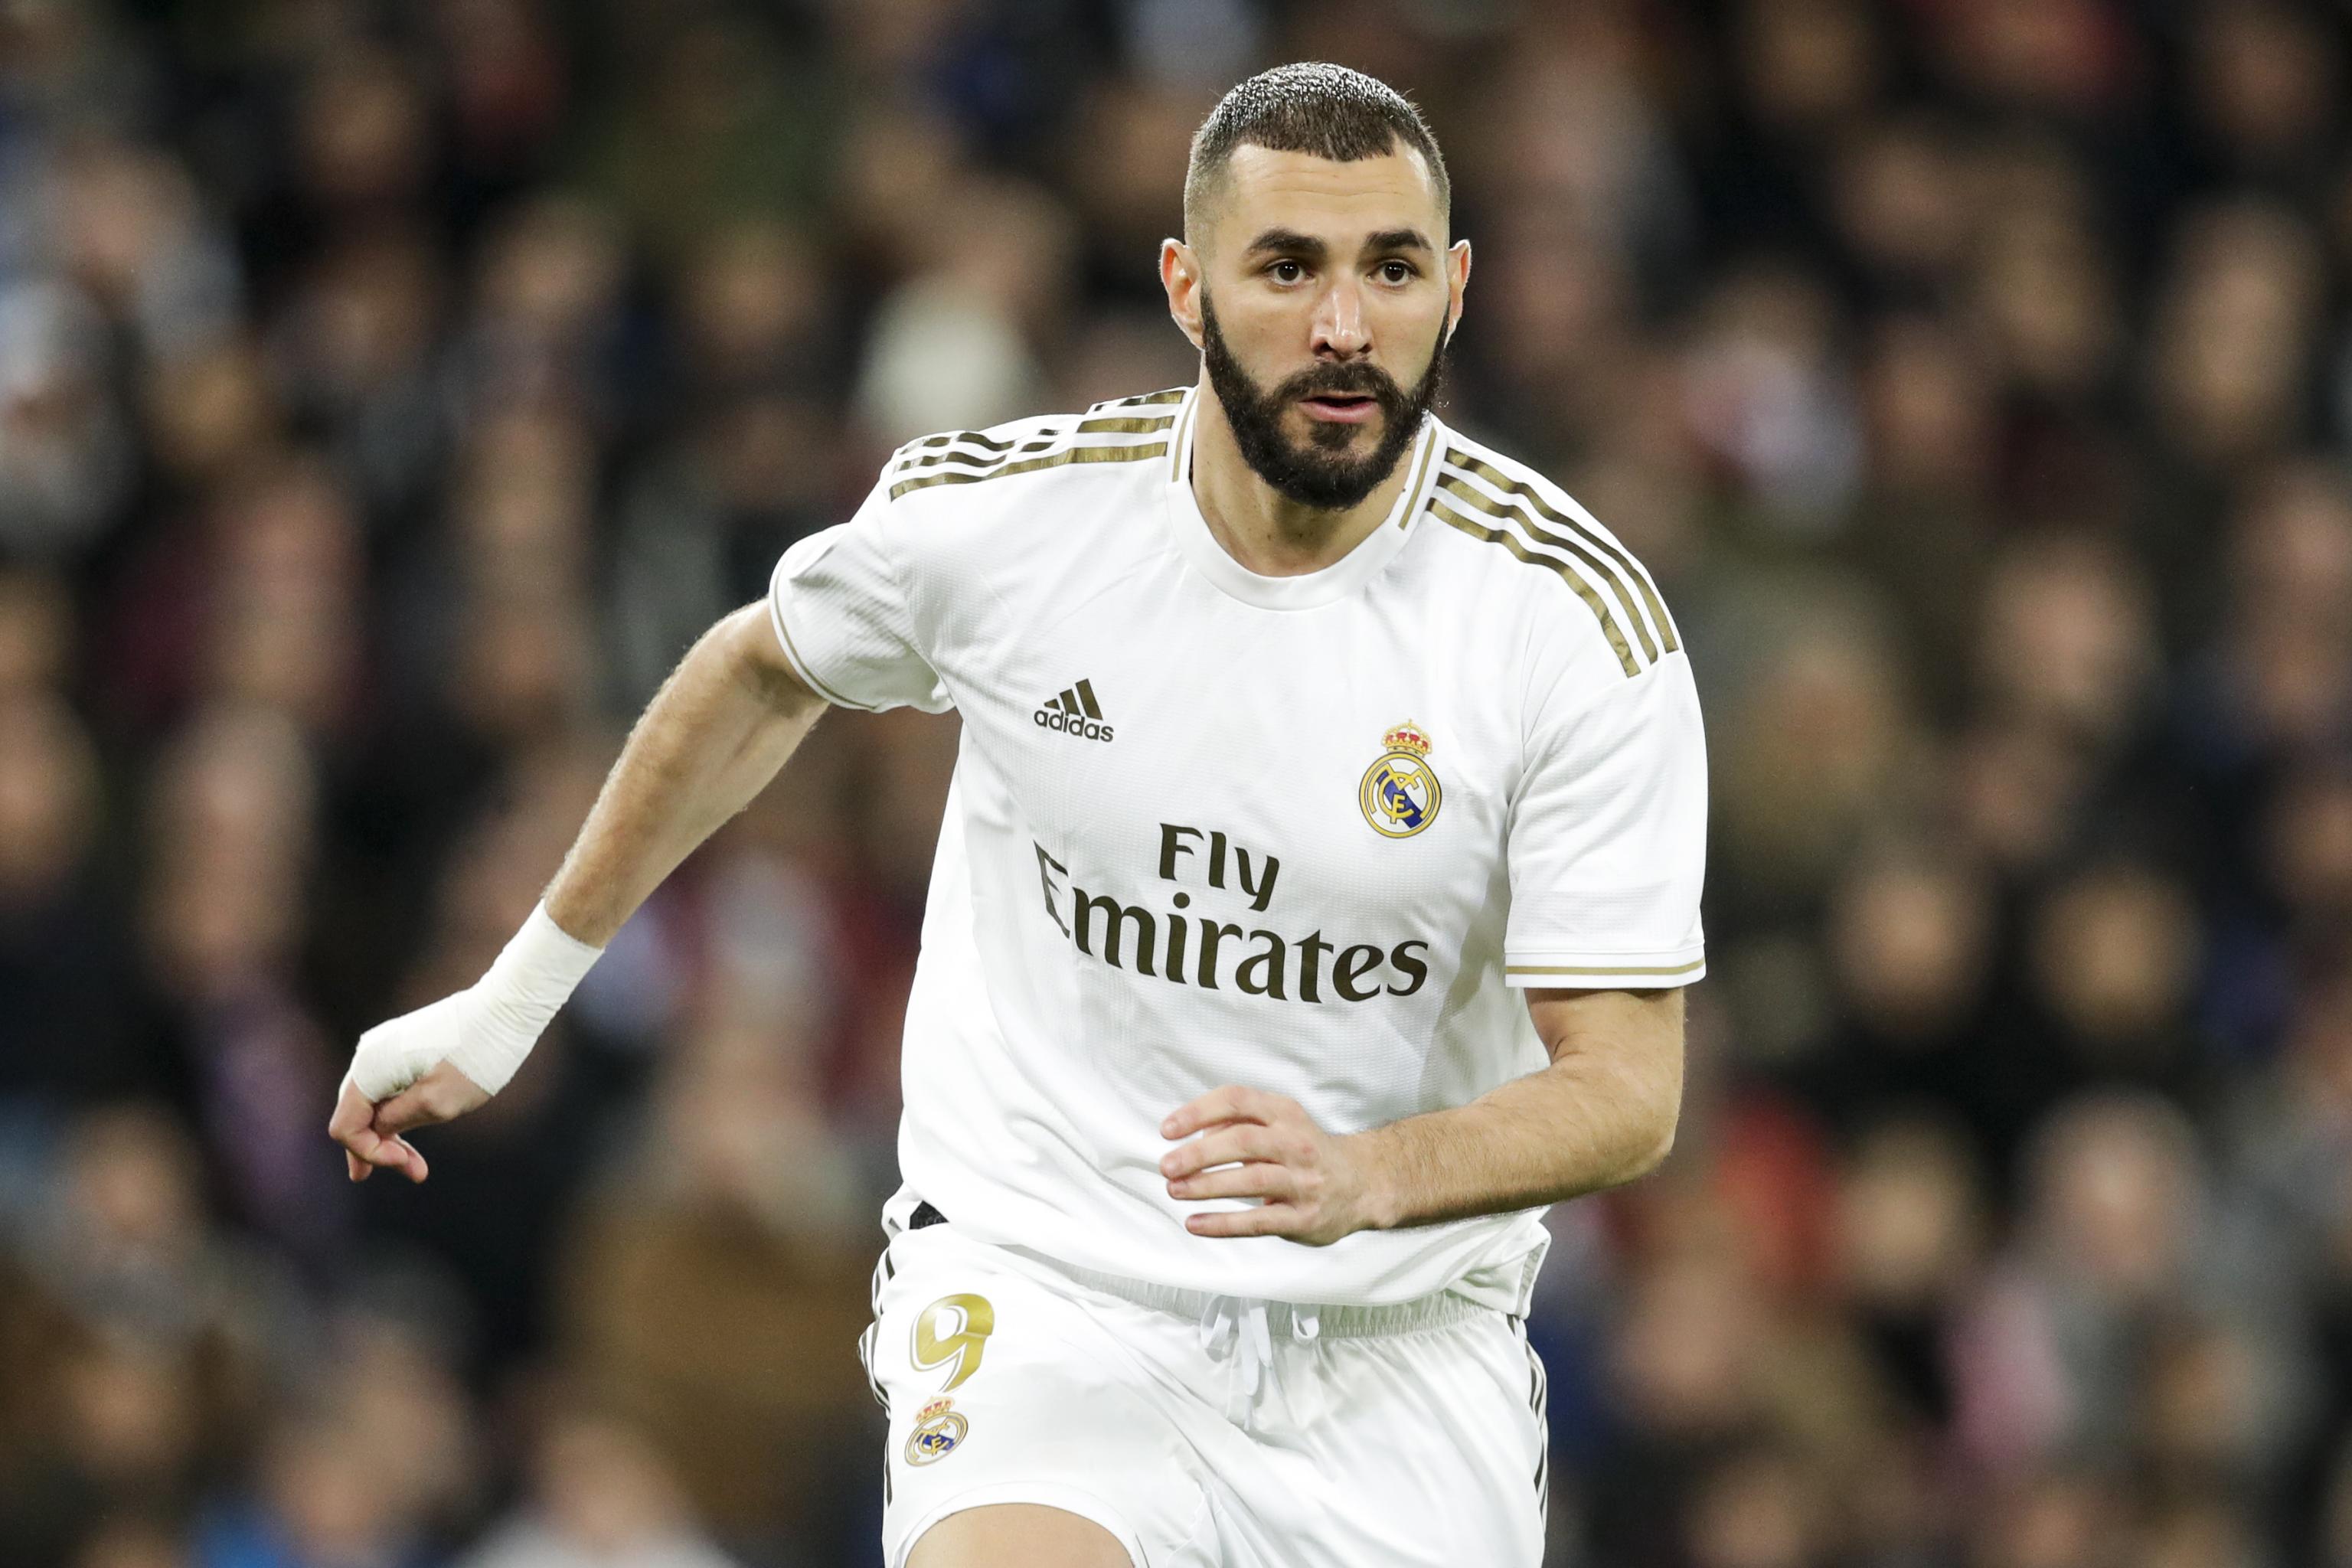 La Liga 2019-20: 3 reasons why Real Madrid will win the league